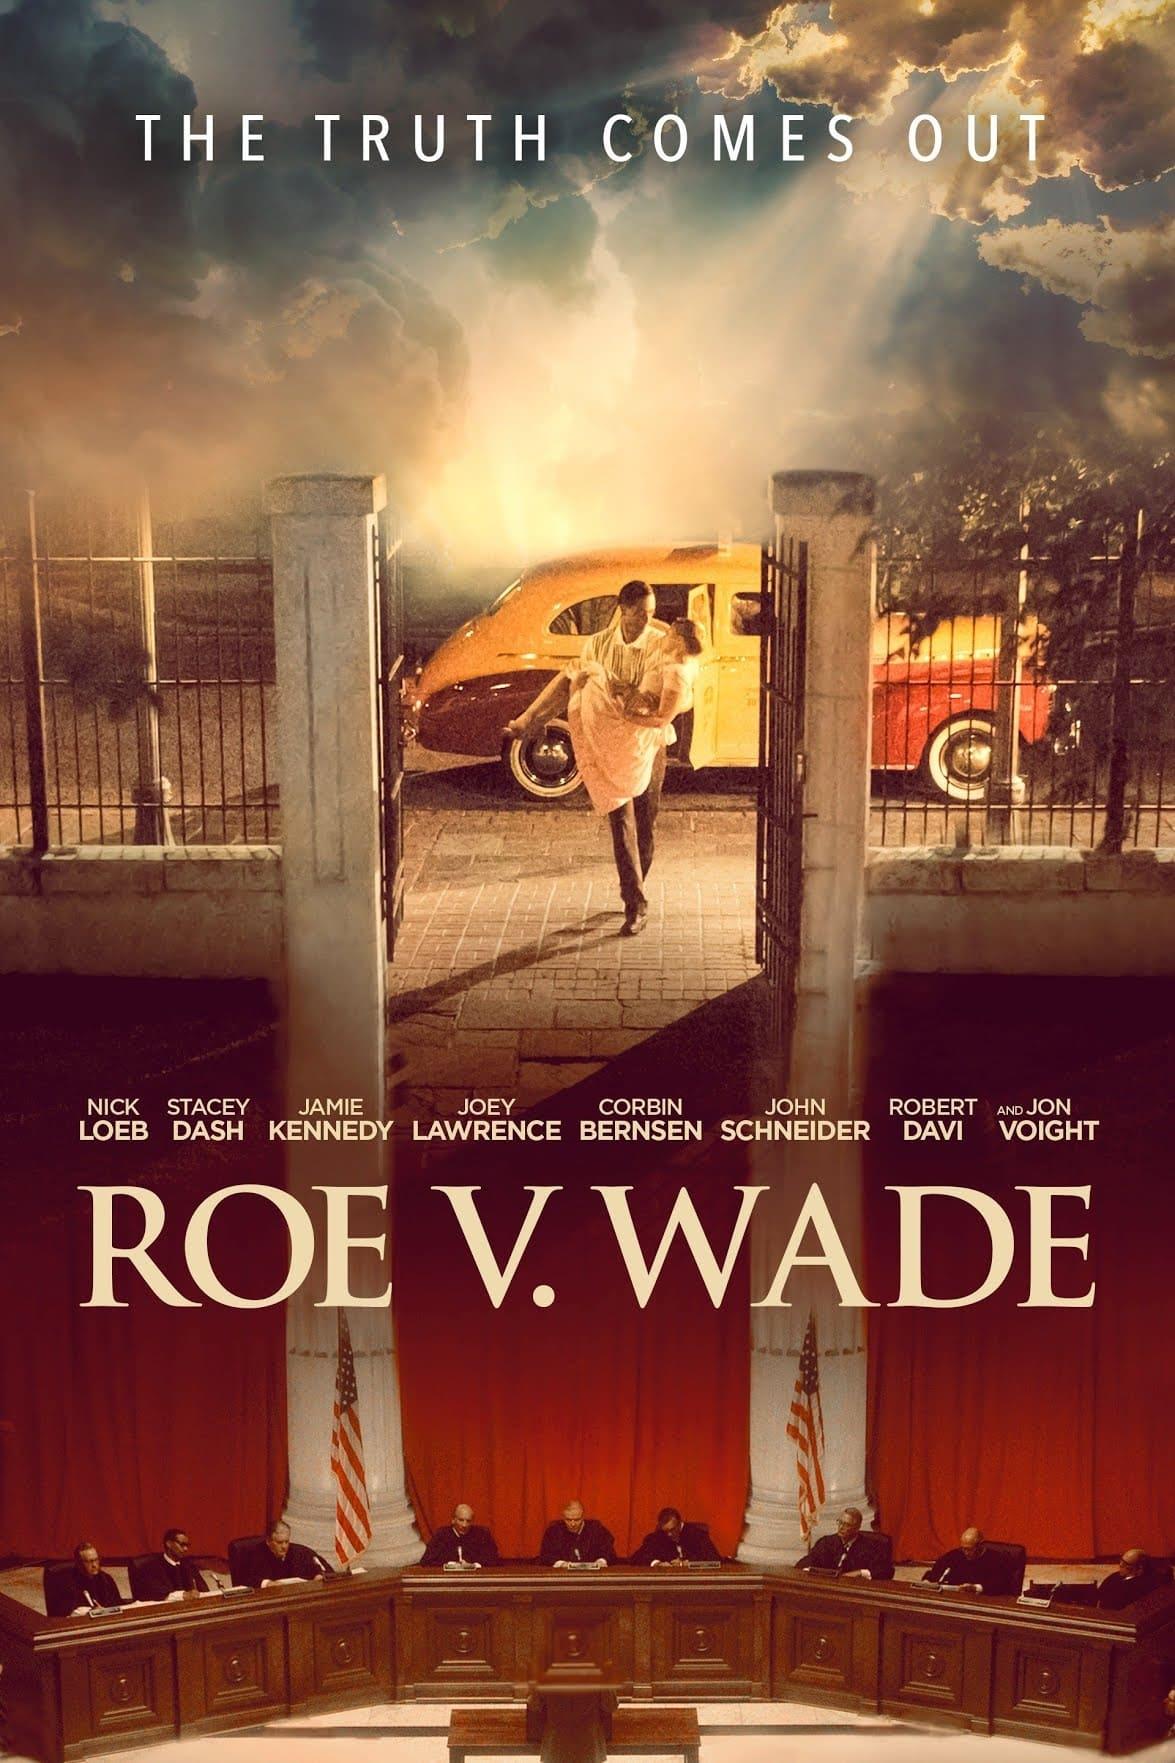 Roe v. Wade poster